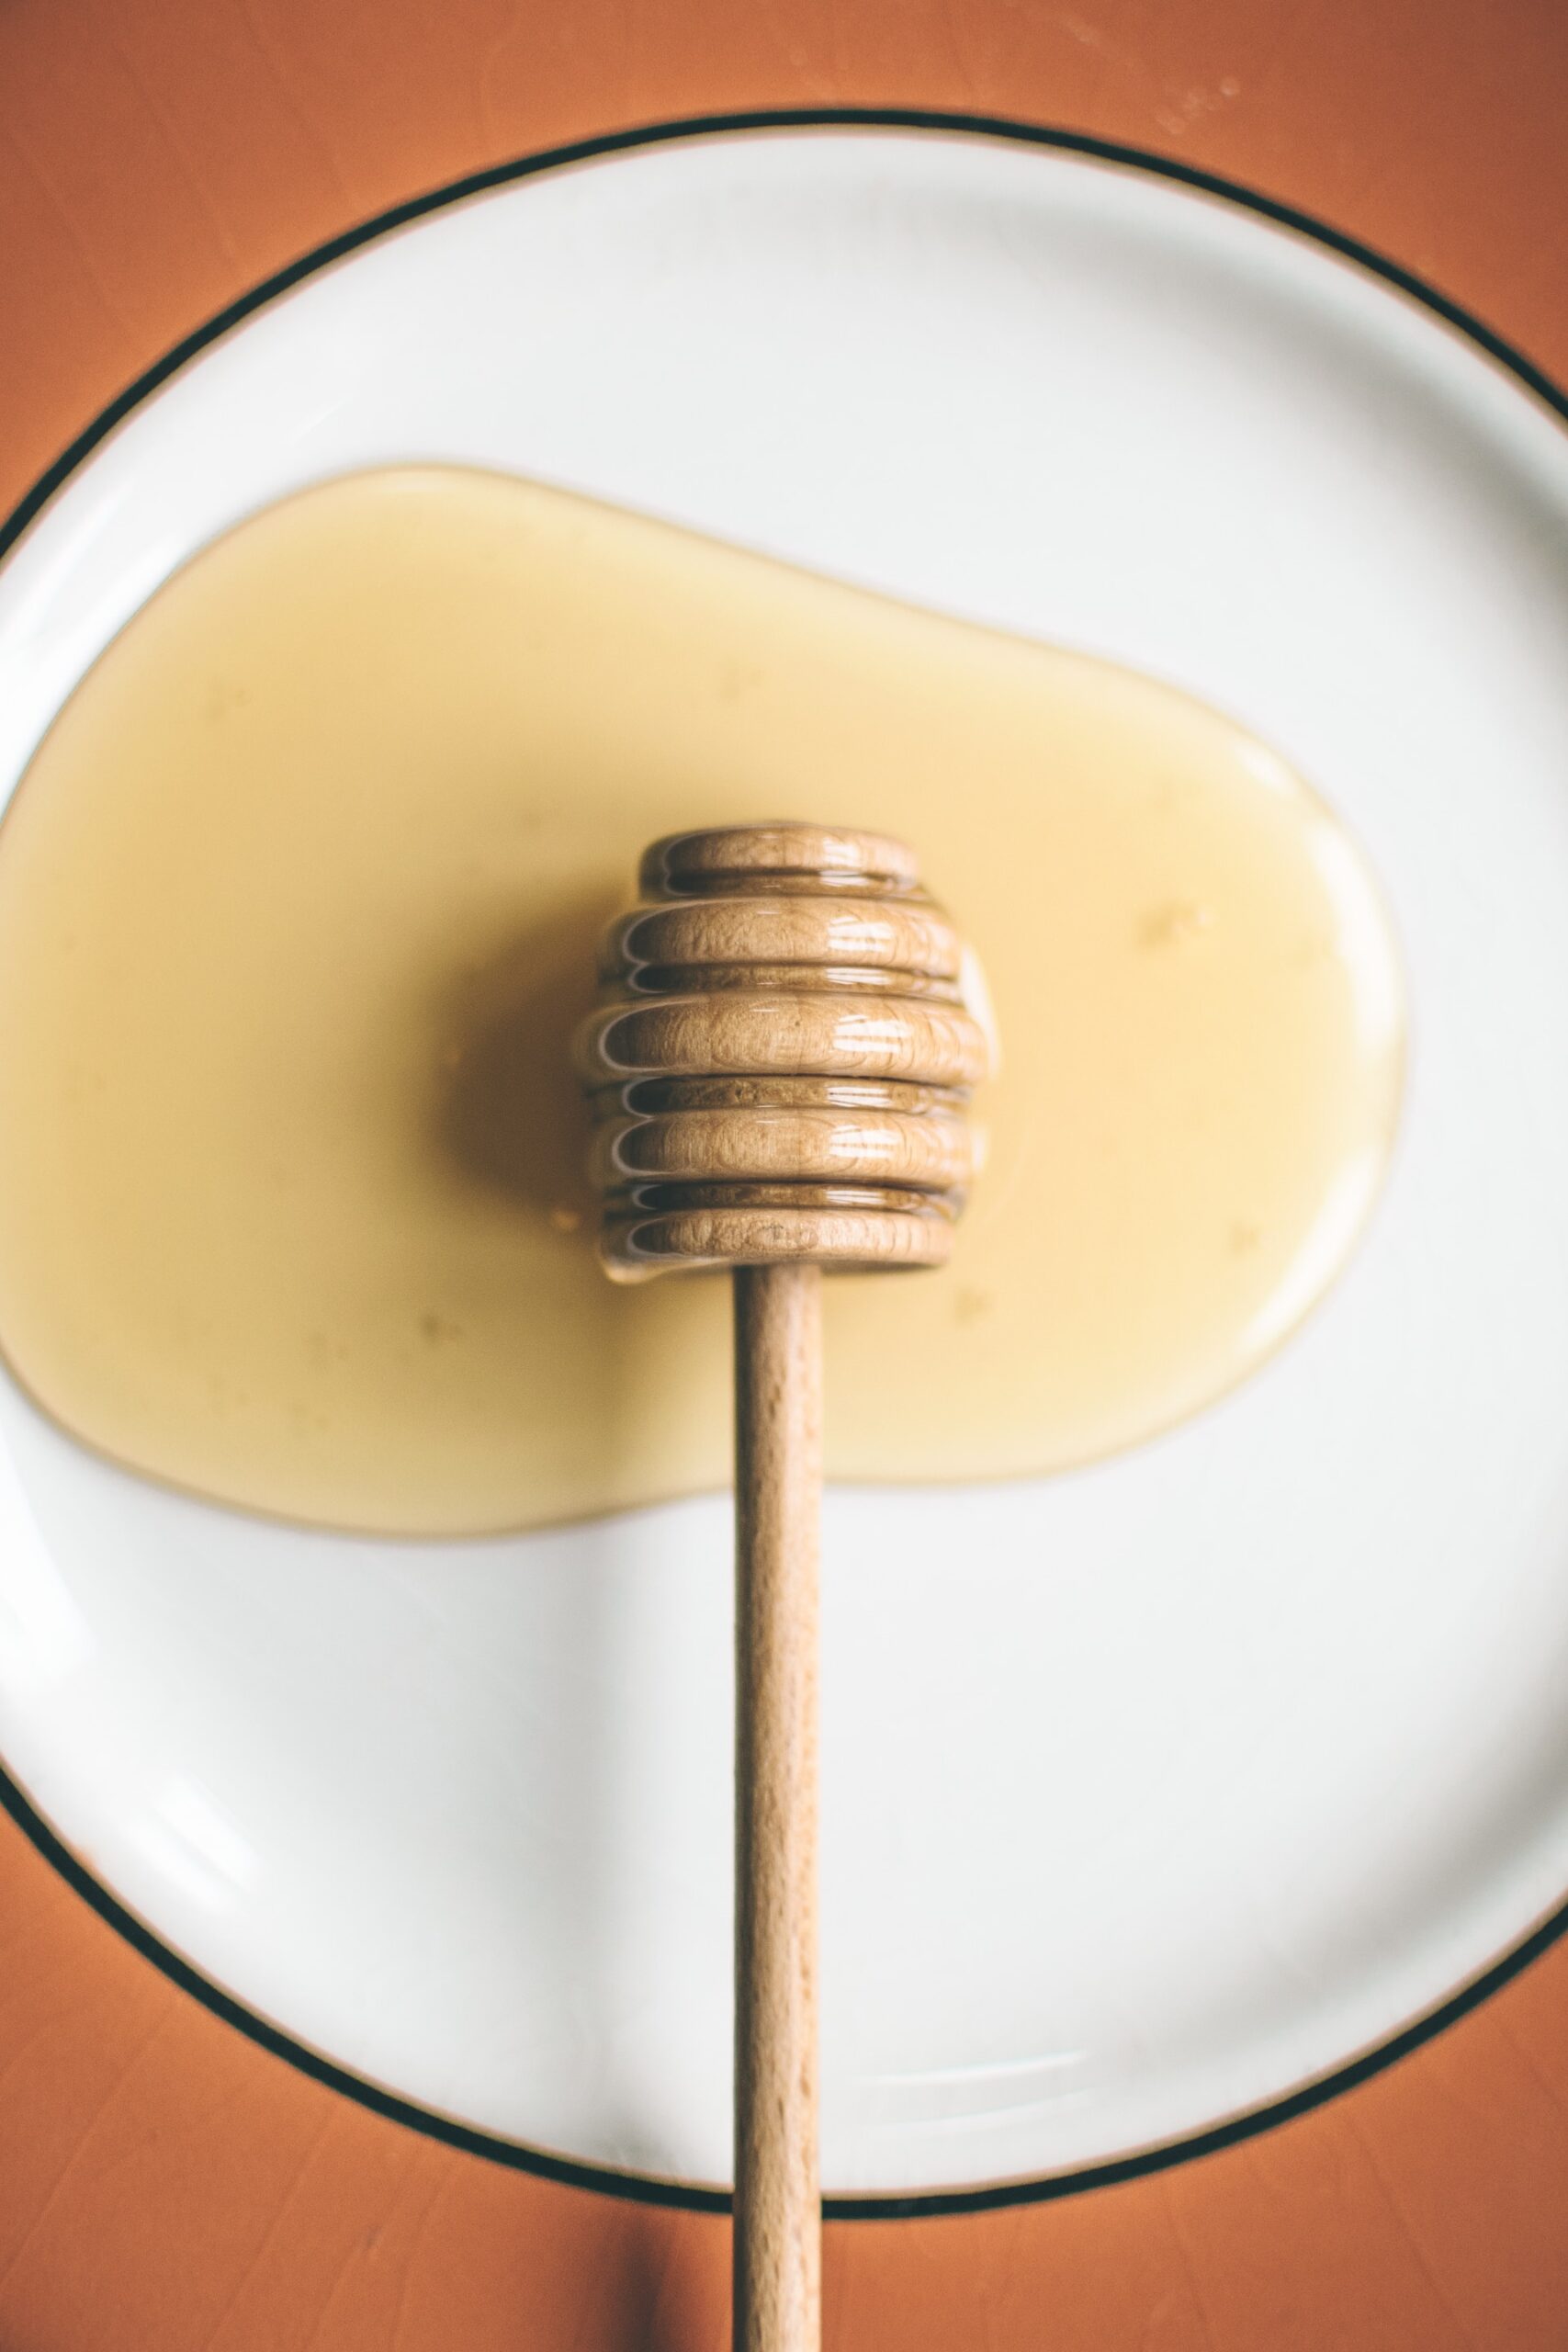 Is Honey Mustard Gluten Free?